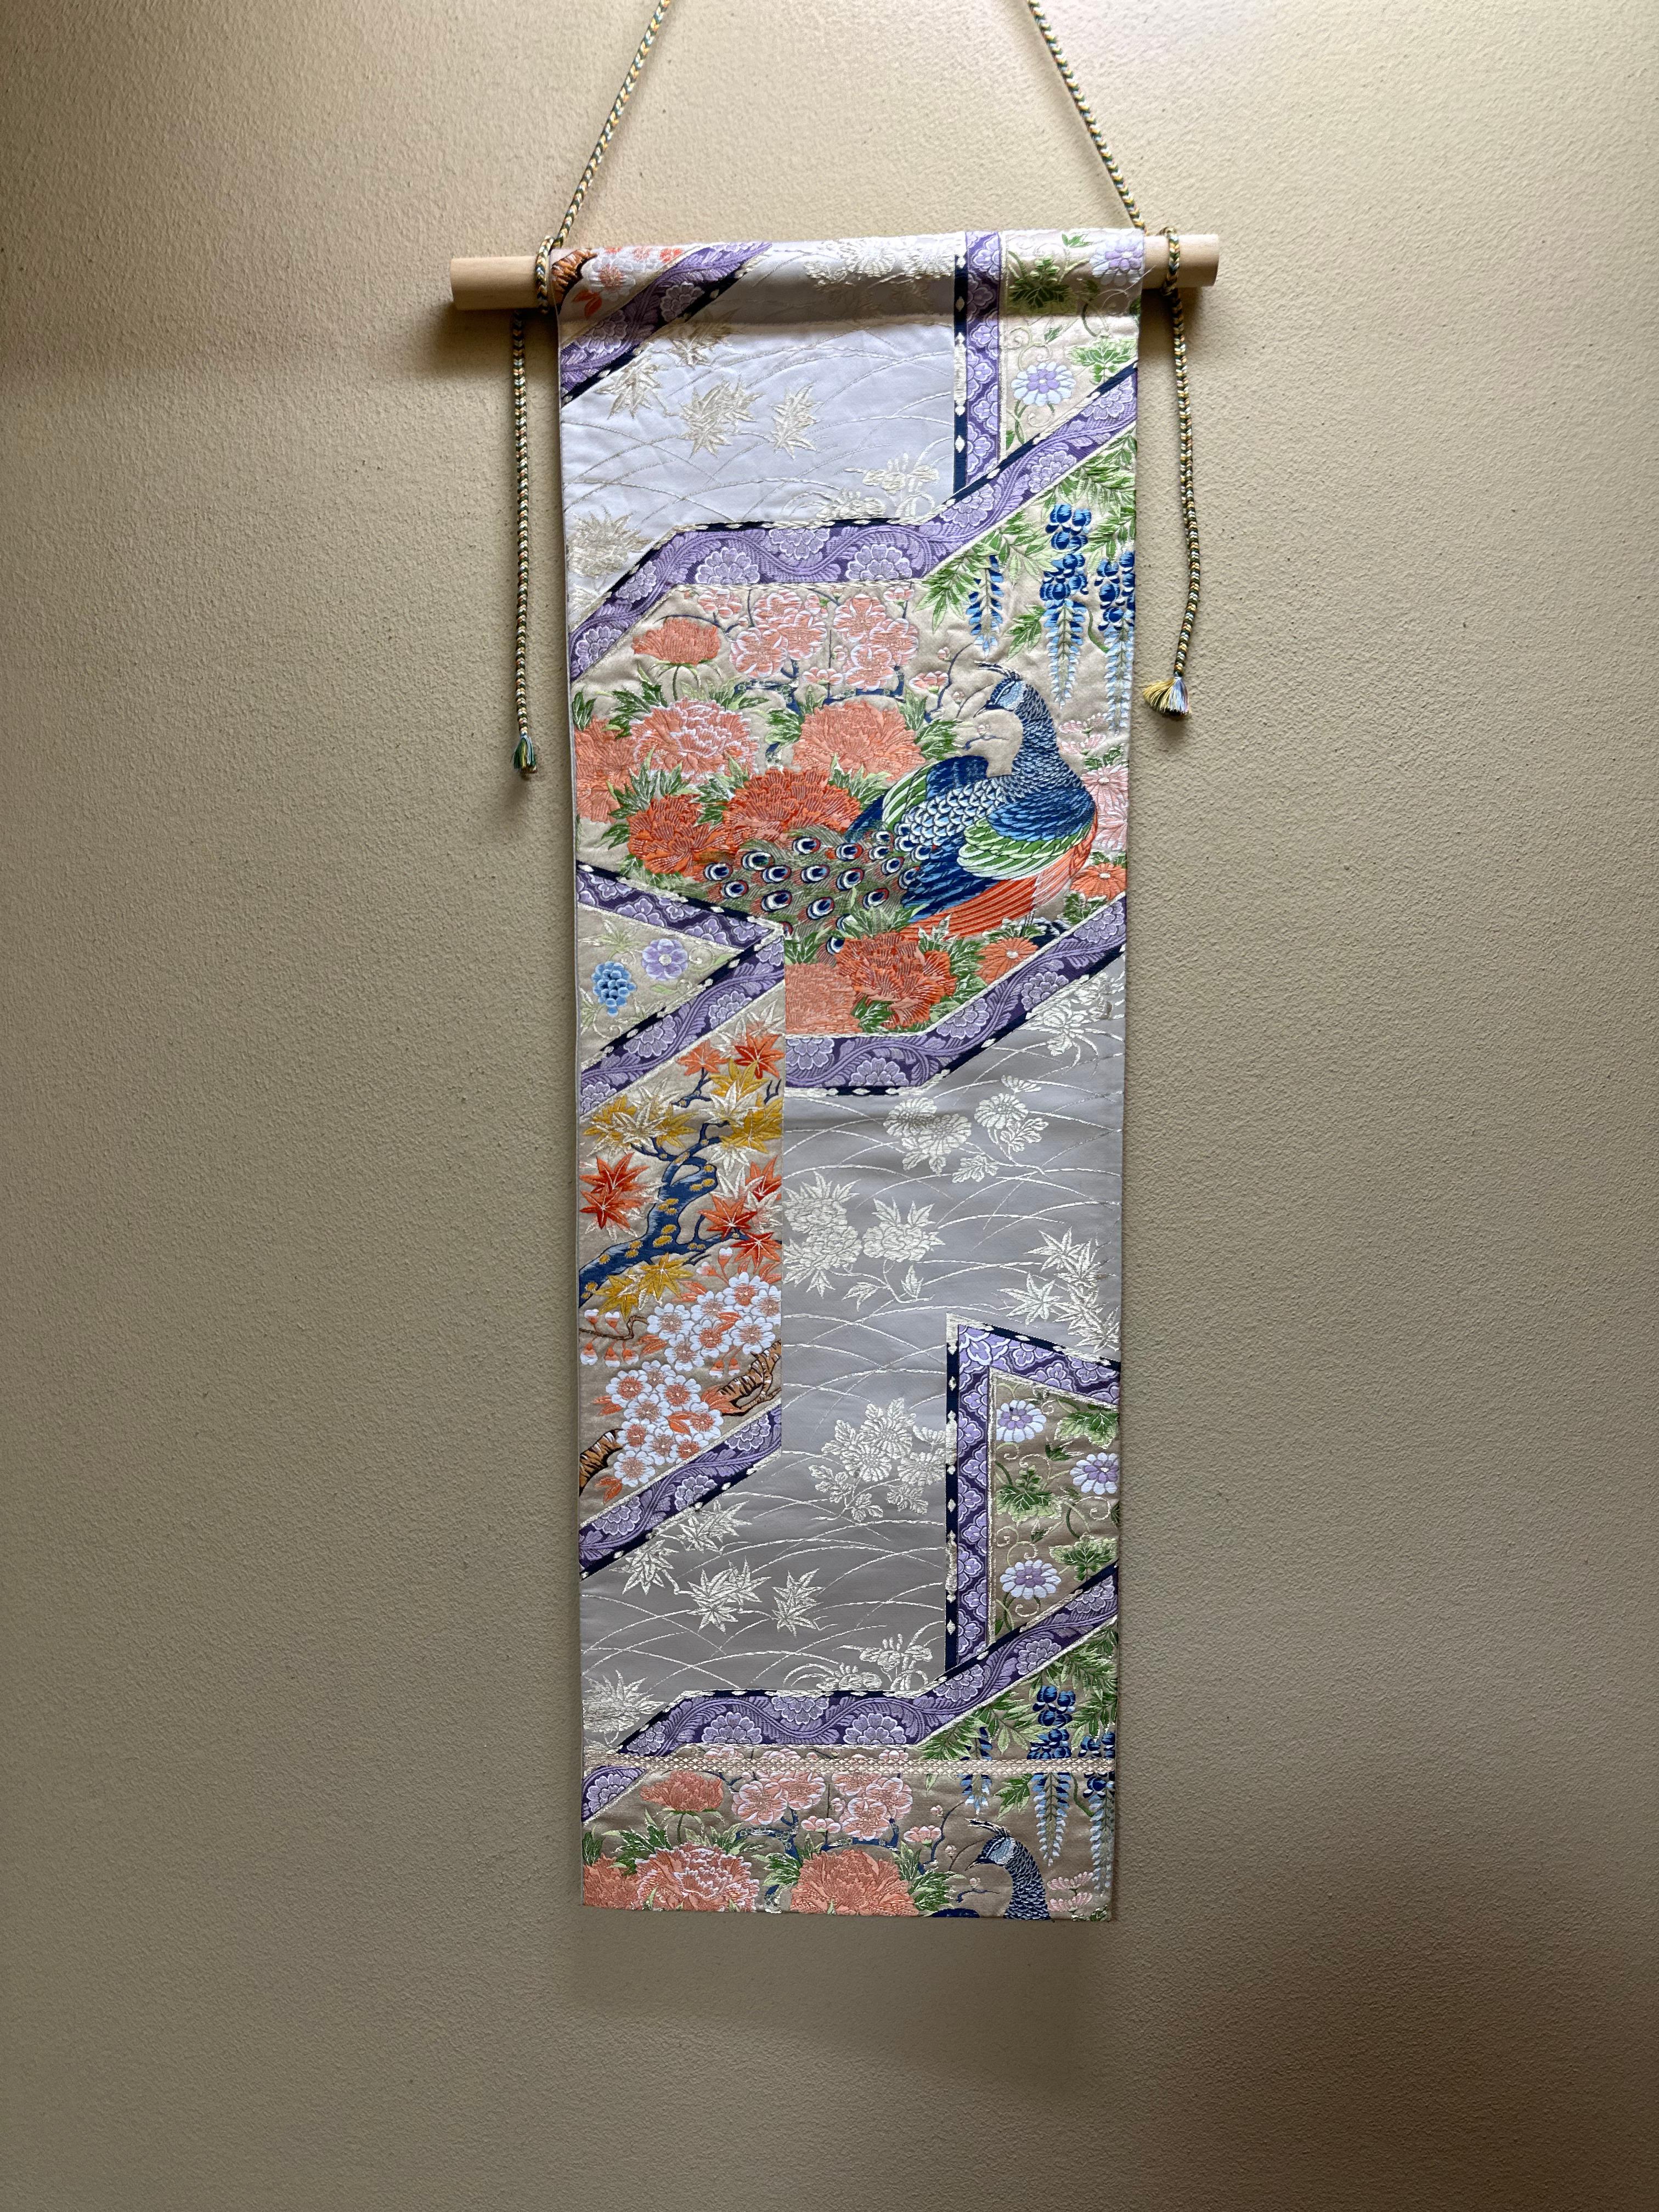 how to display a kimono on a wall